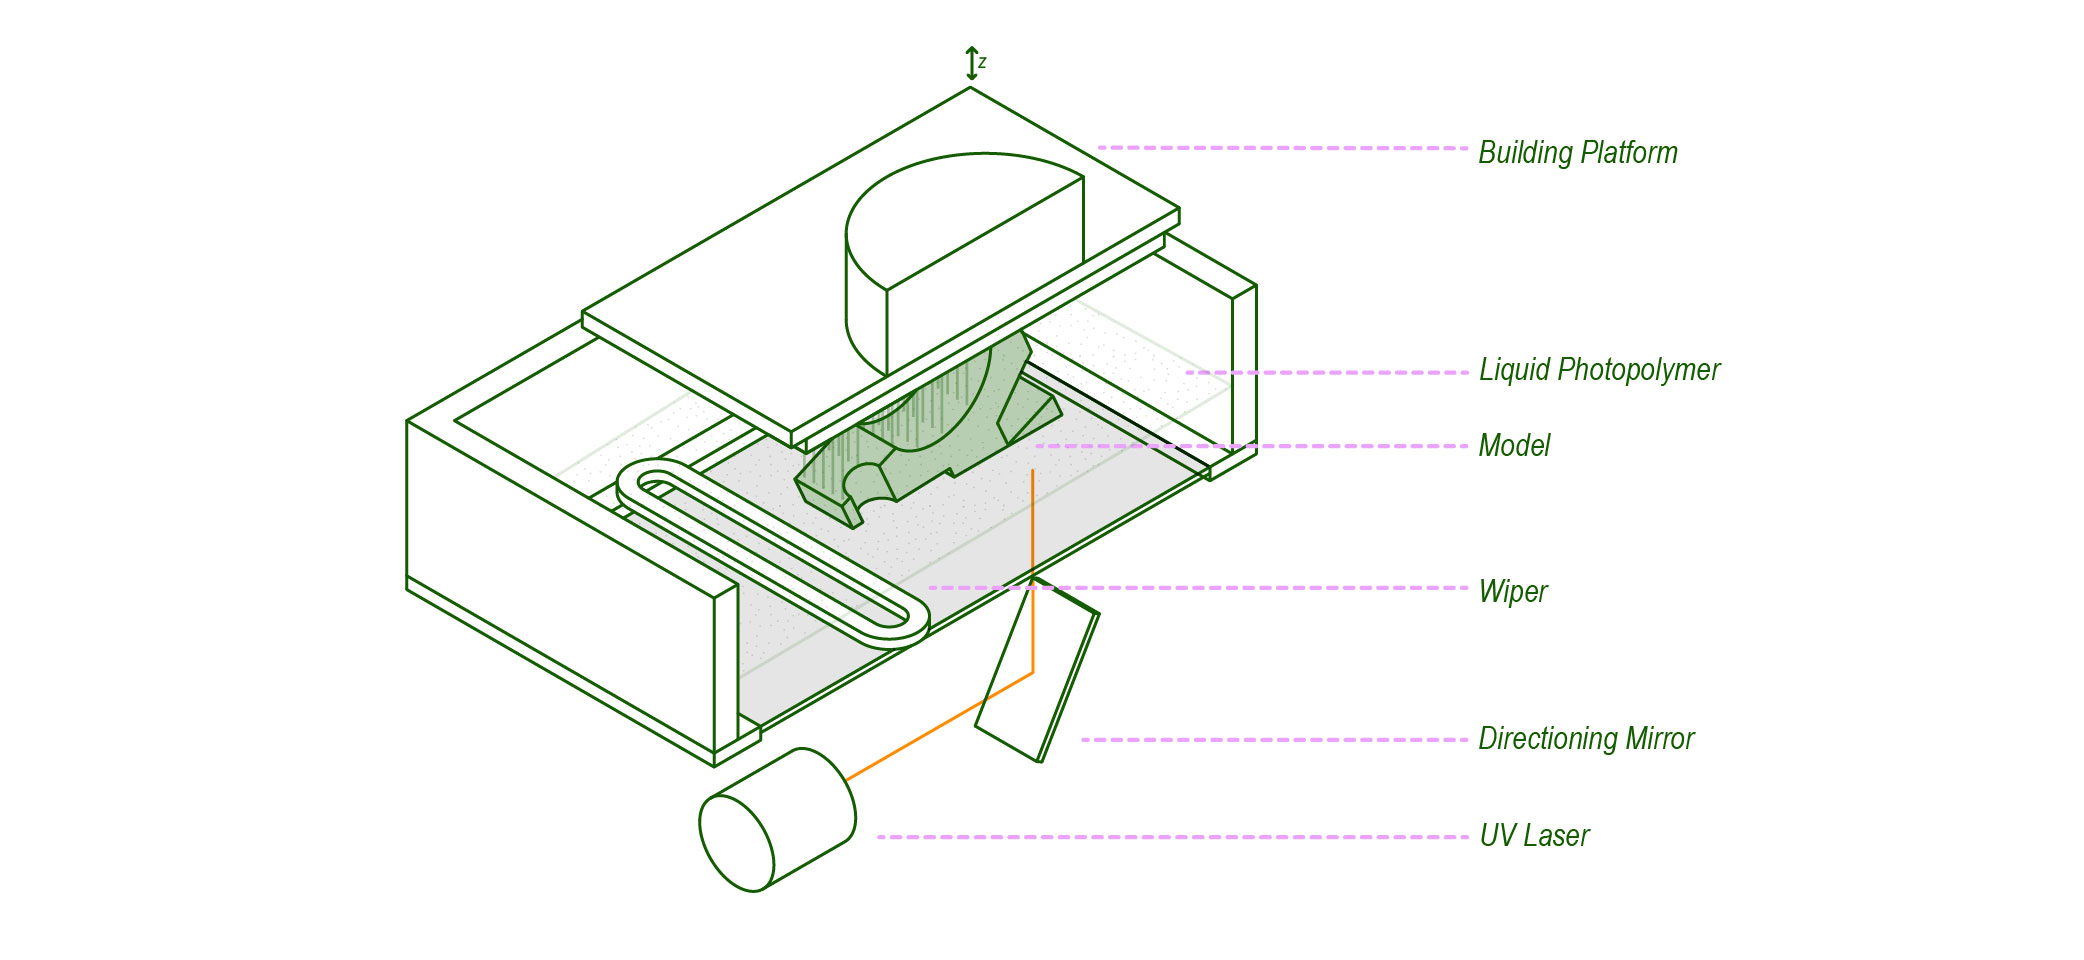 Diagram of the parts of a SLA printer